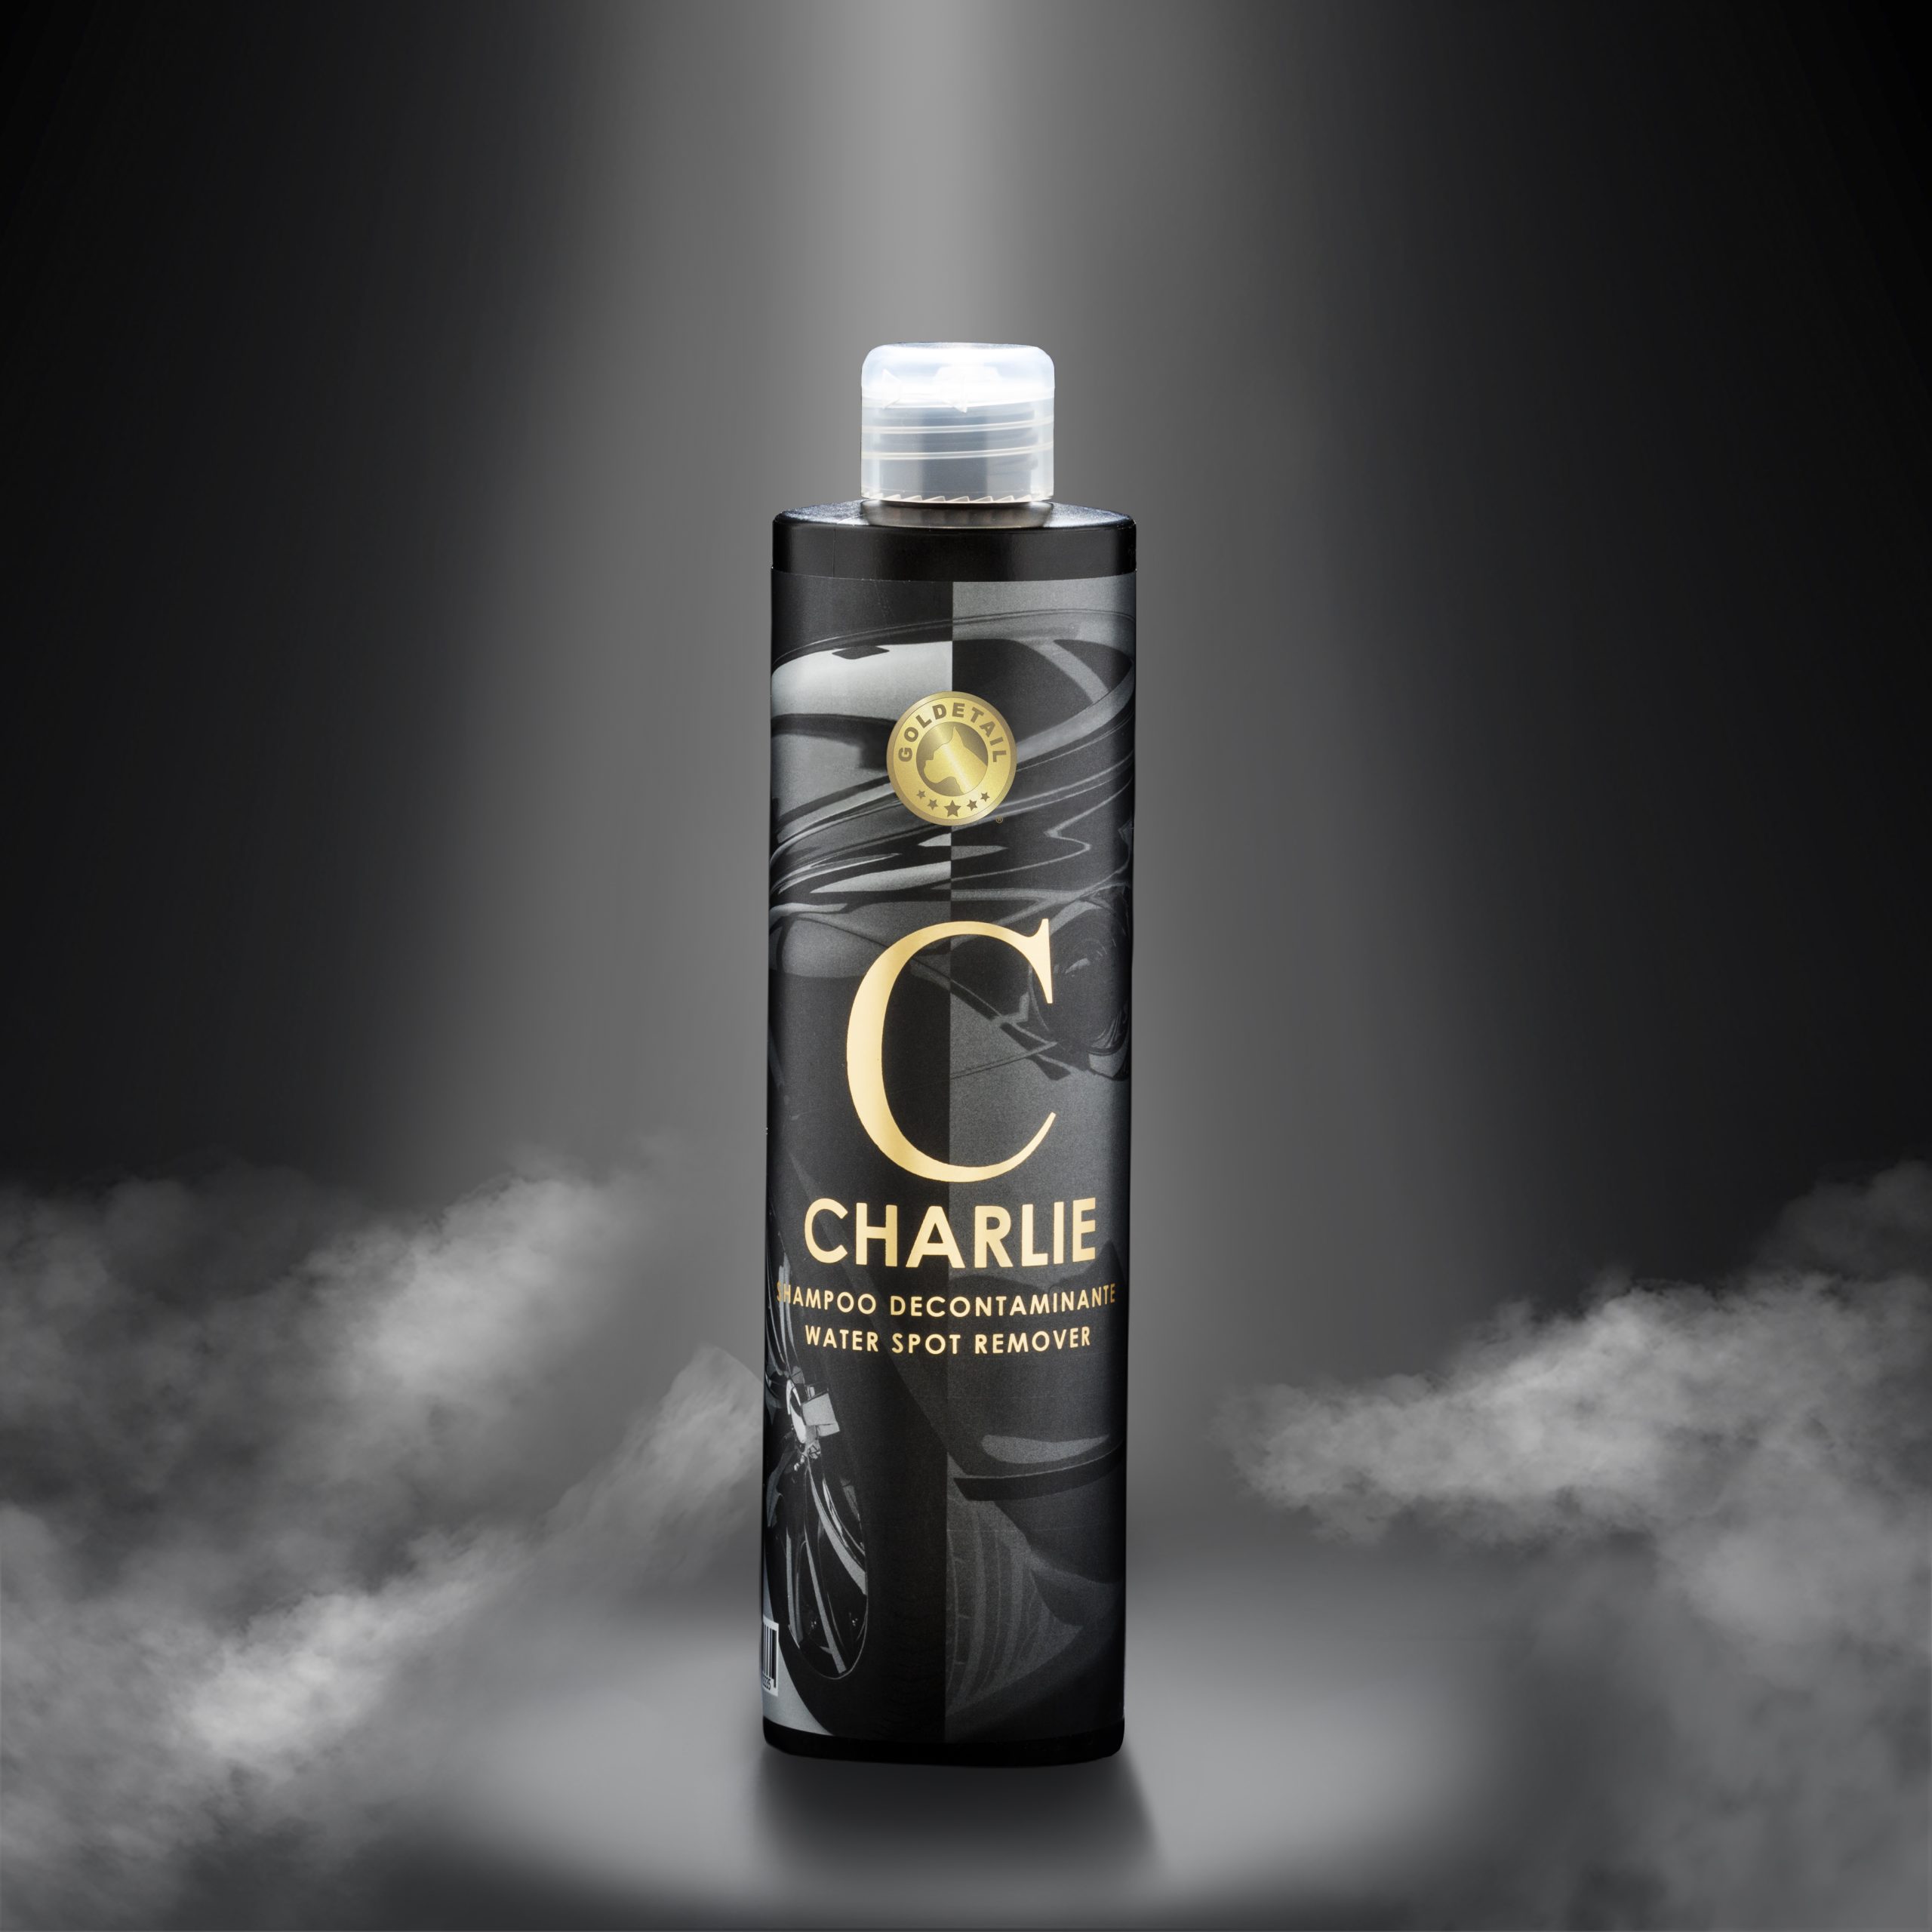 Charlie - Shampoo decontaminante professionale - Goldetail